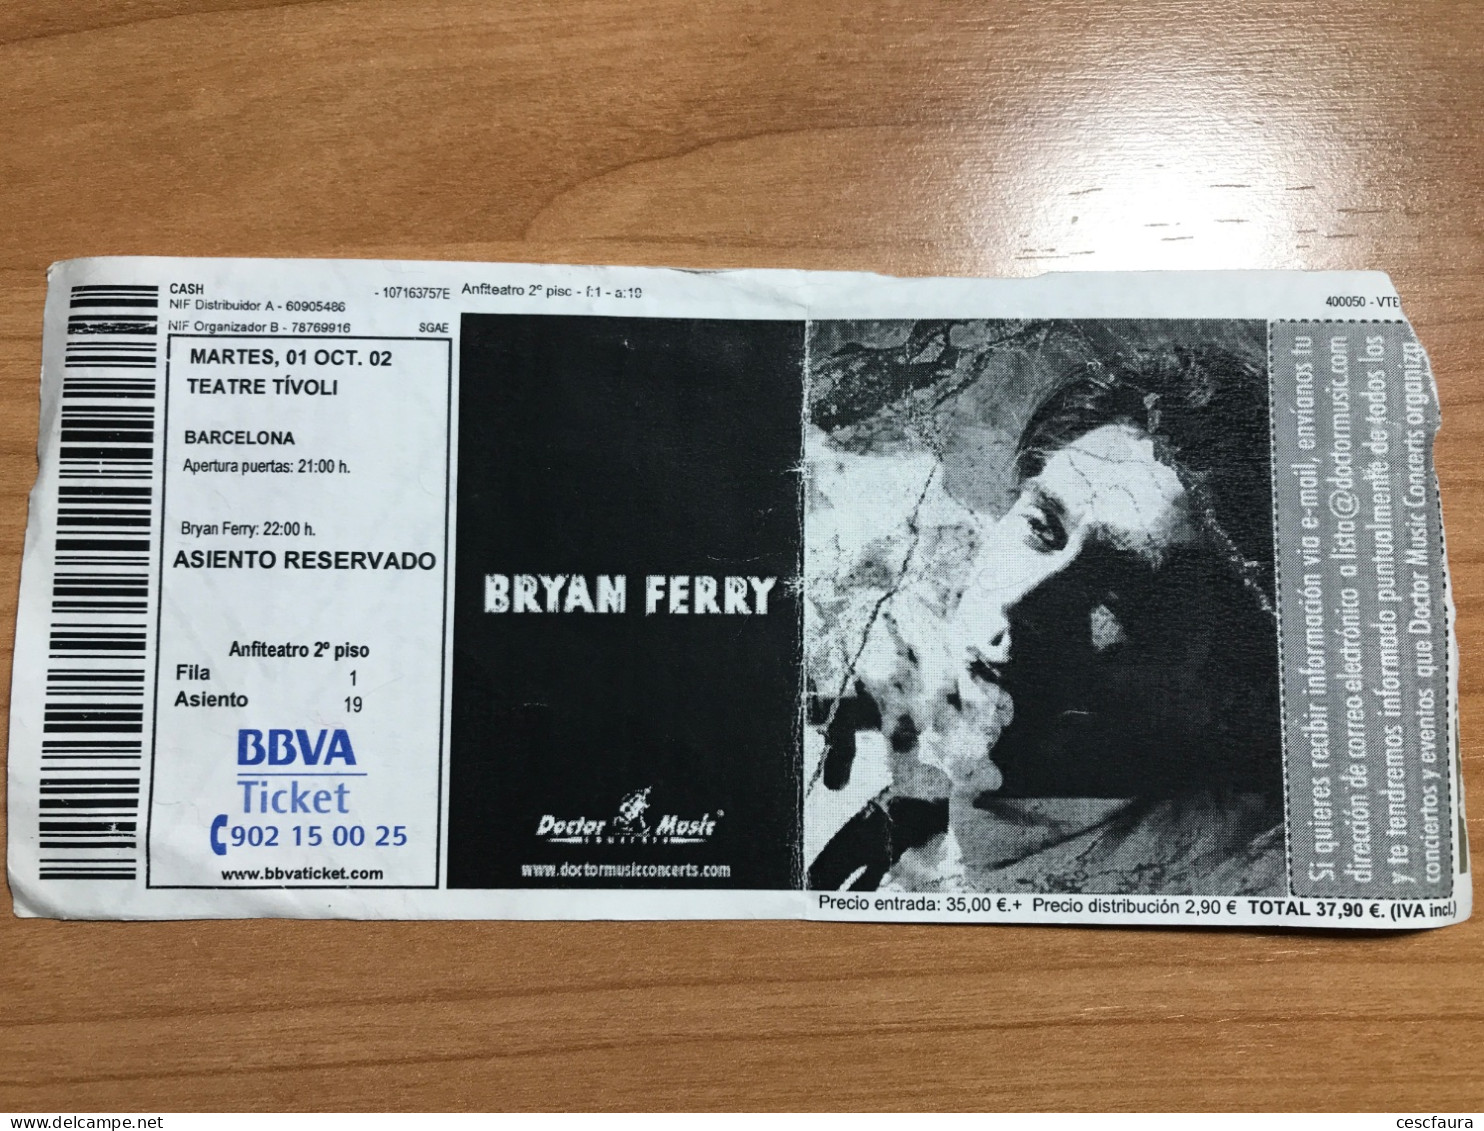 Bryan Ferry Concert Ticket Barcelona 01/10/2002 Teatre Tívoli Entrada - Concert Tickets